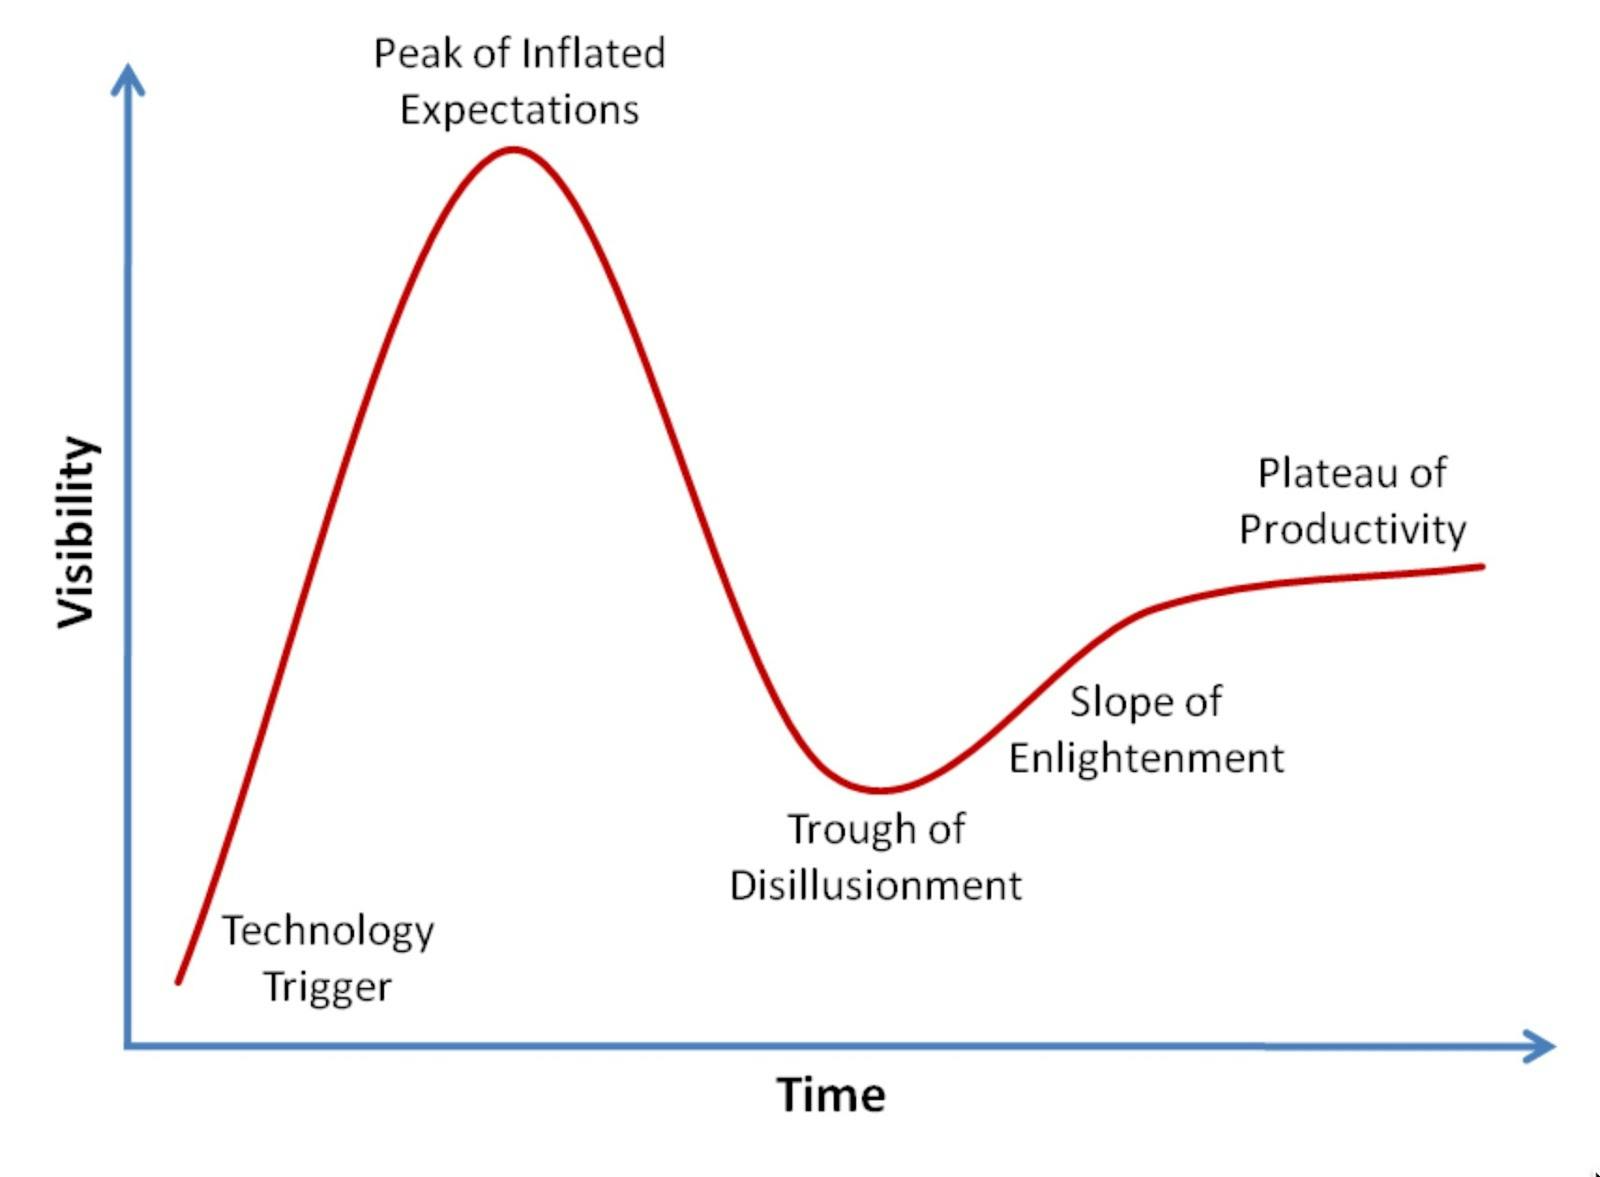 YC's innovation/technology hype curve - image credit: seraf-investor.com